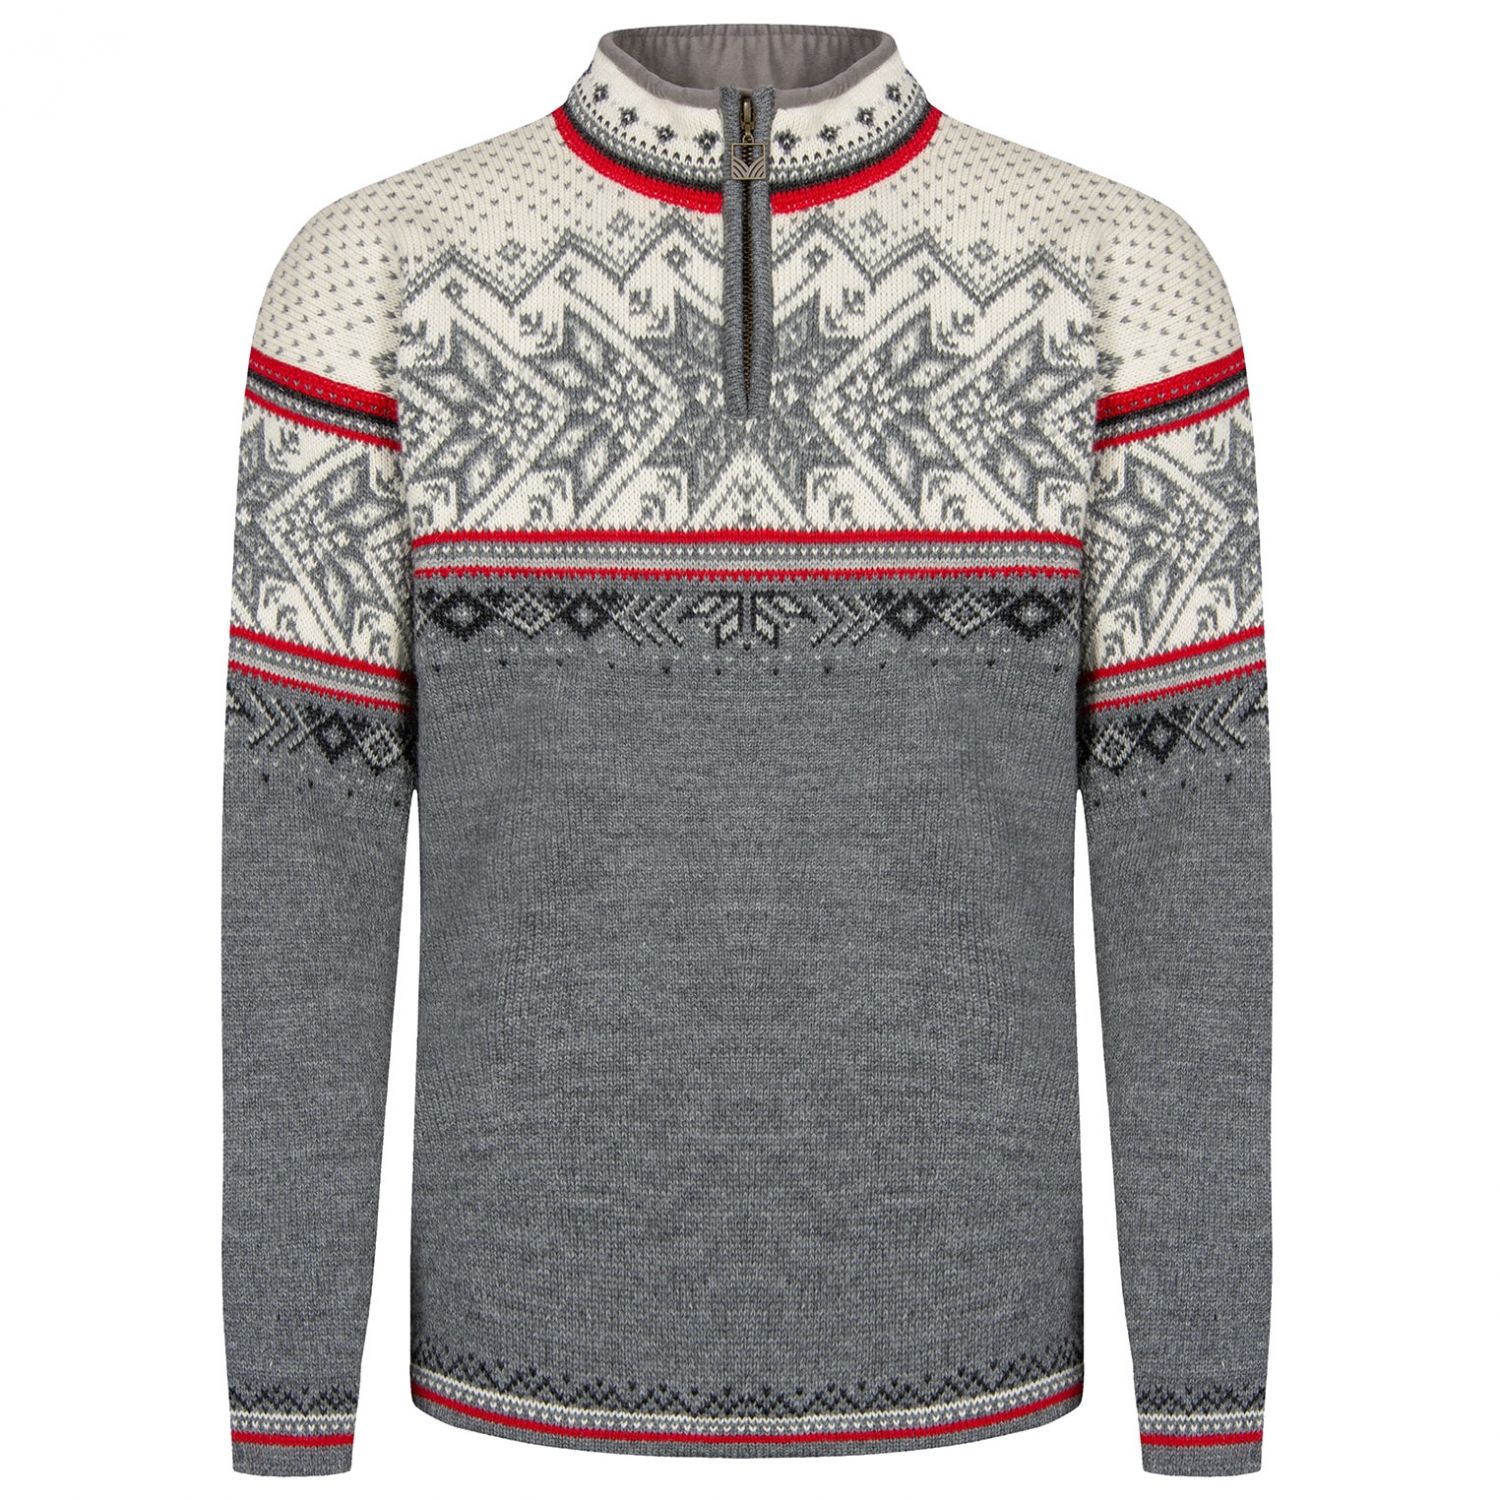 of Norway sweater, herre,